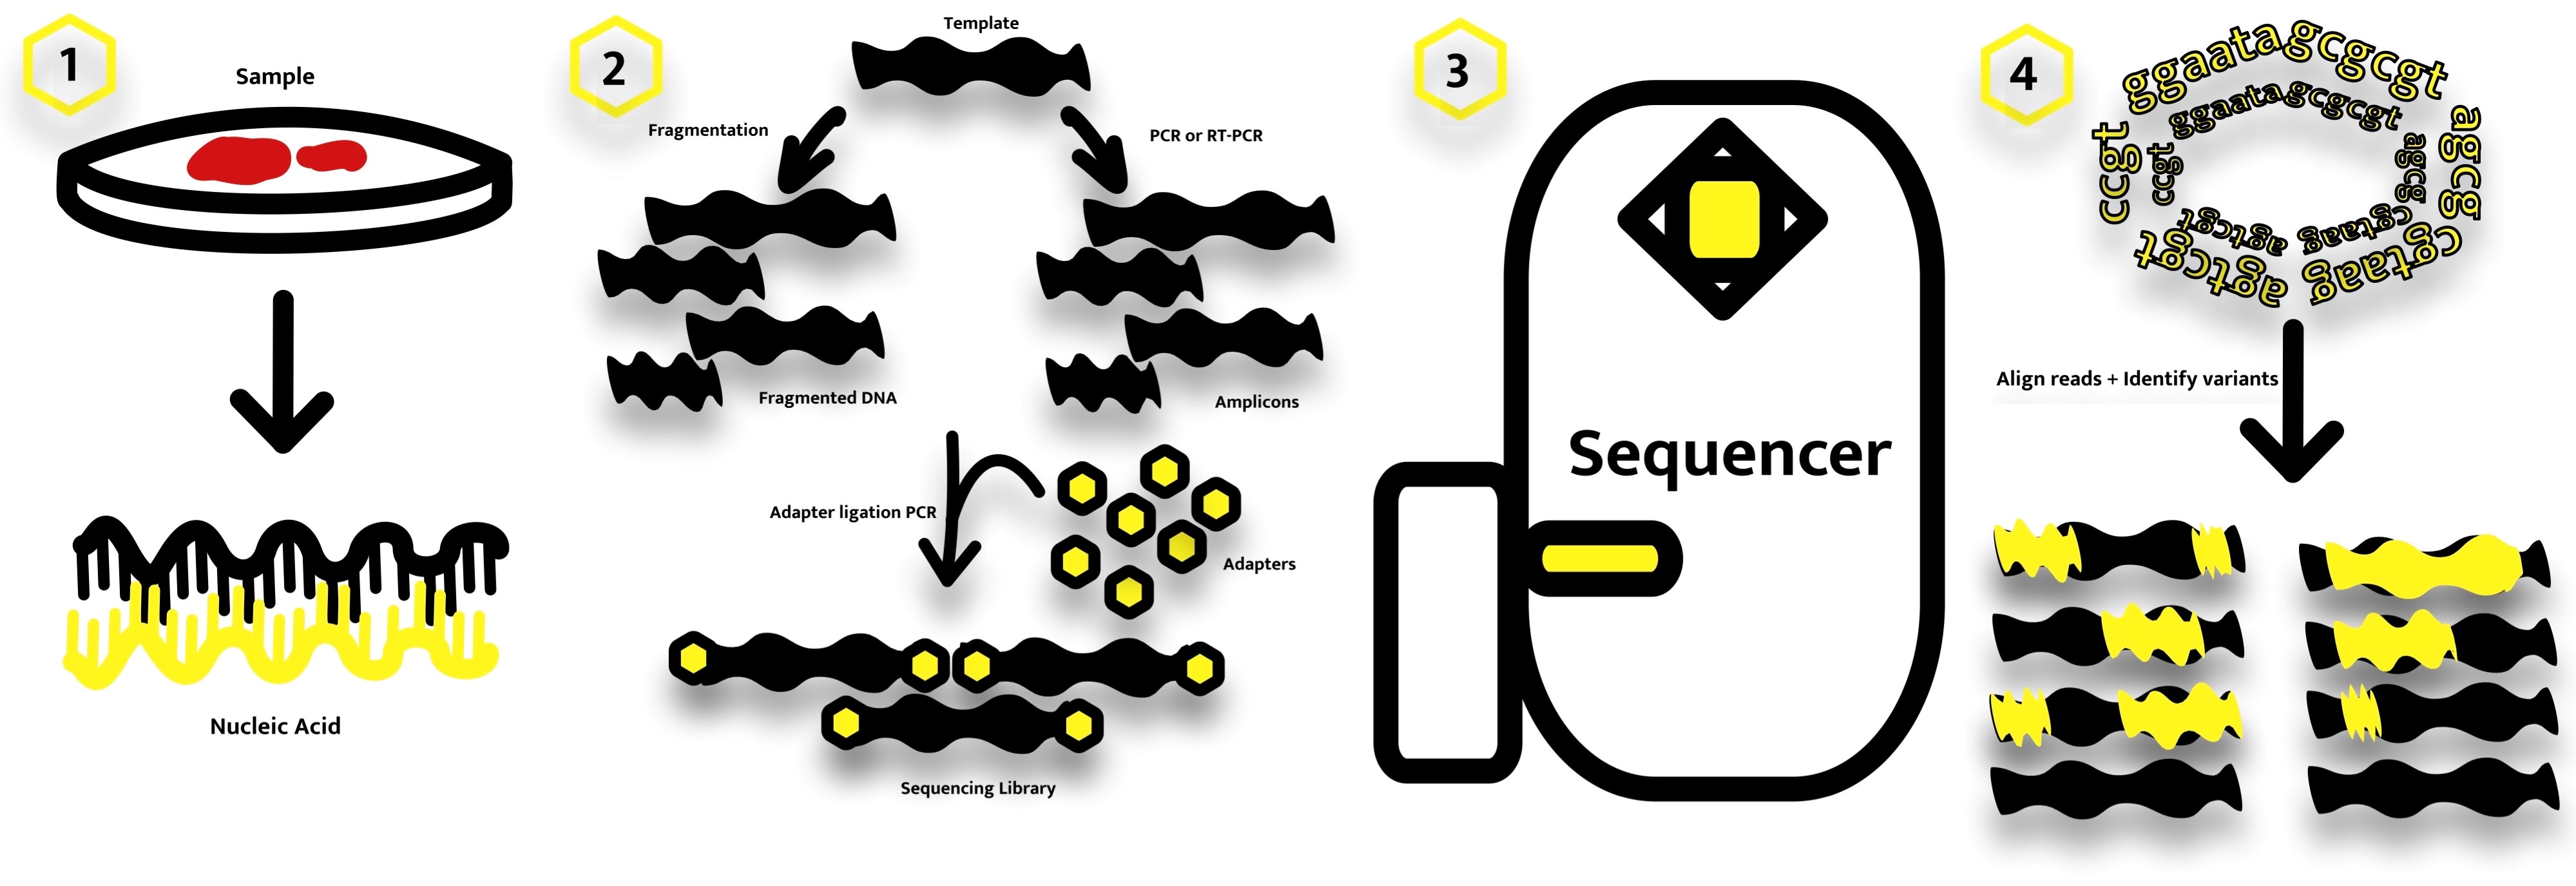 Nect-Generation Sequencing Diagram